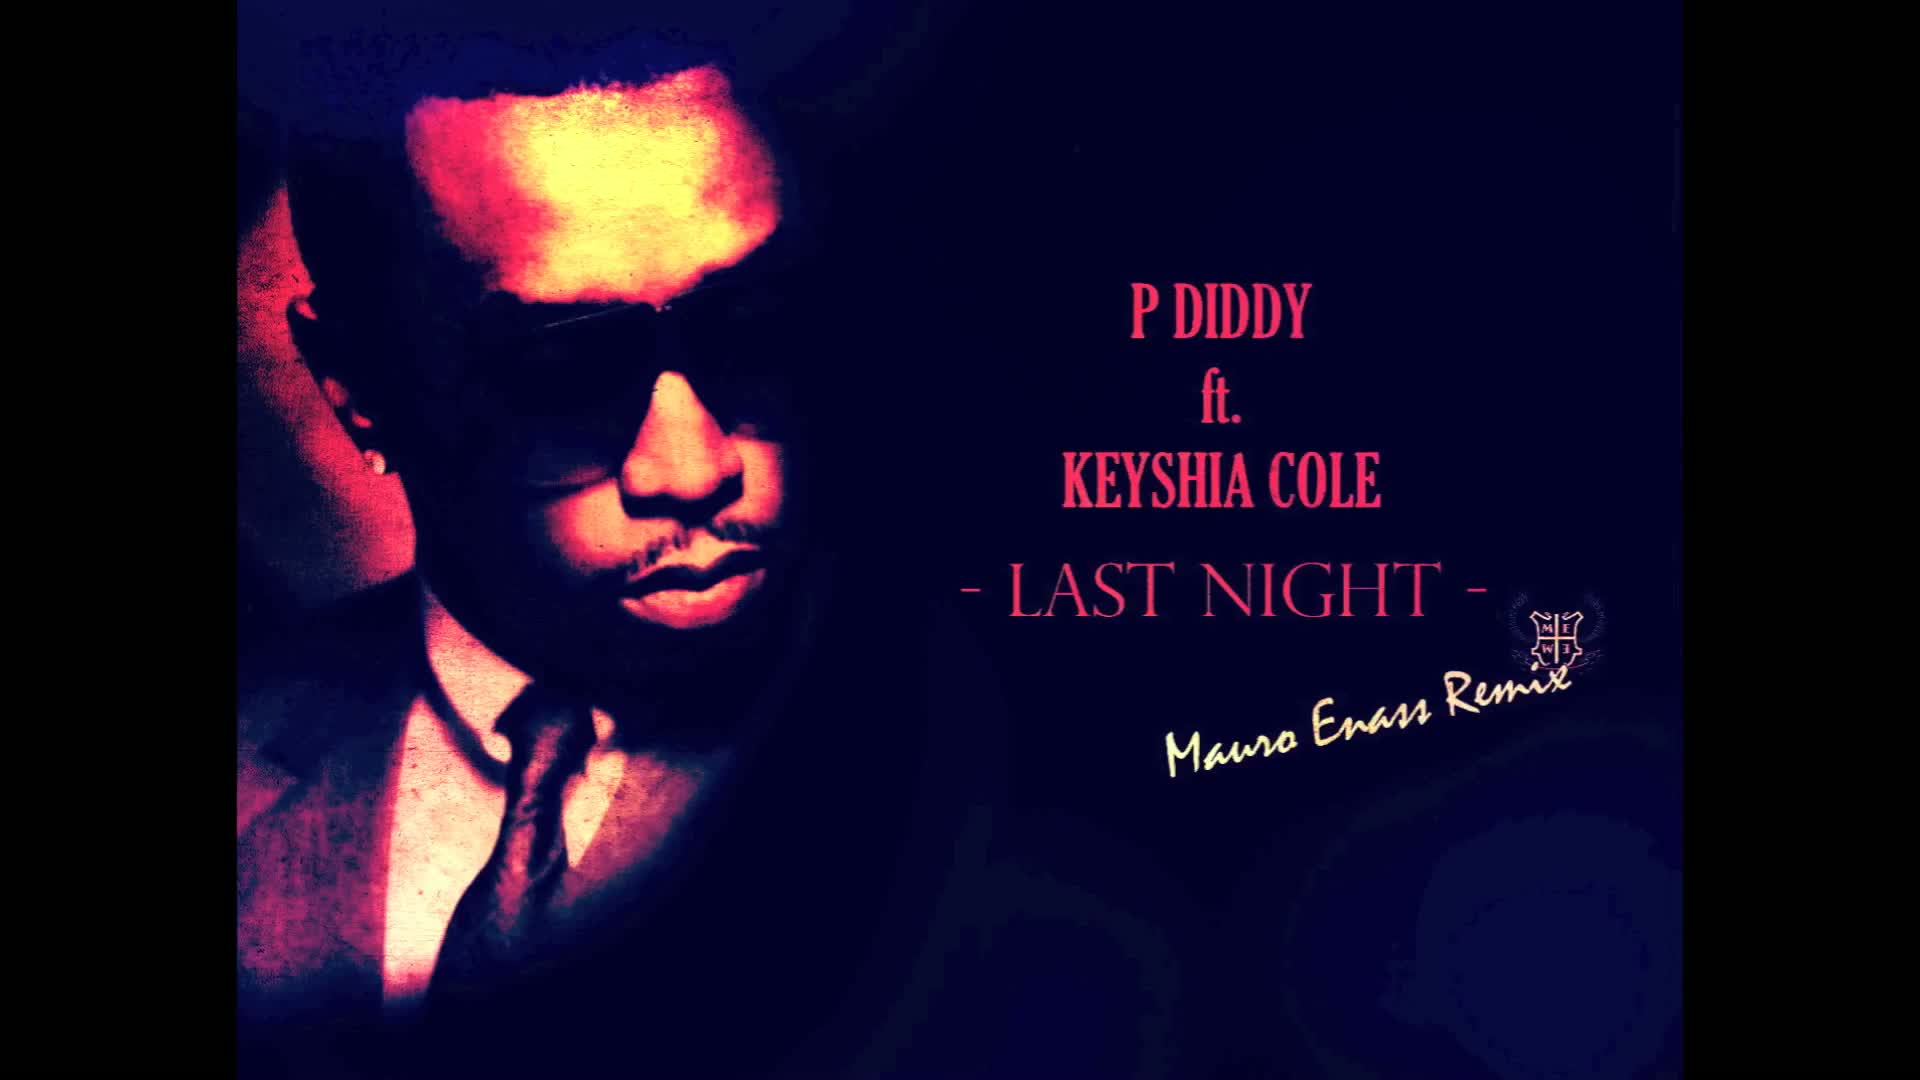 P Diddy ft. Keyshia Cole - Last Night (Mauro Enass Remix)